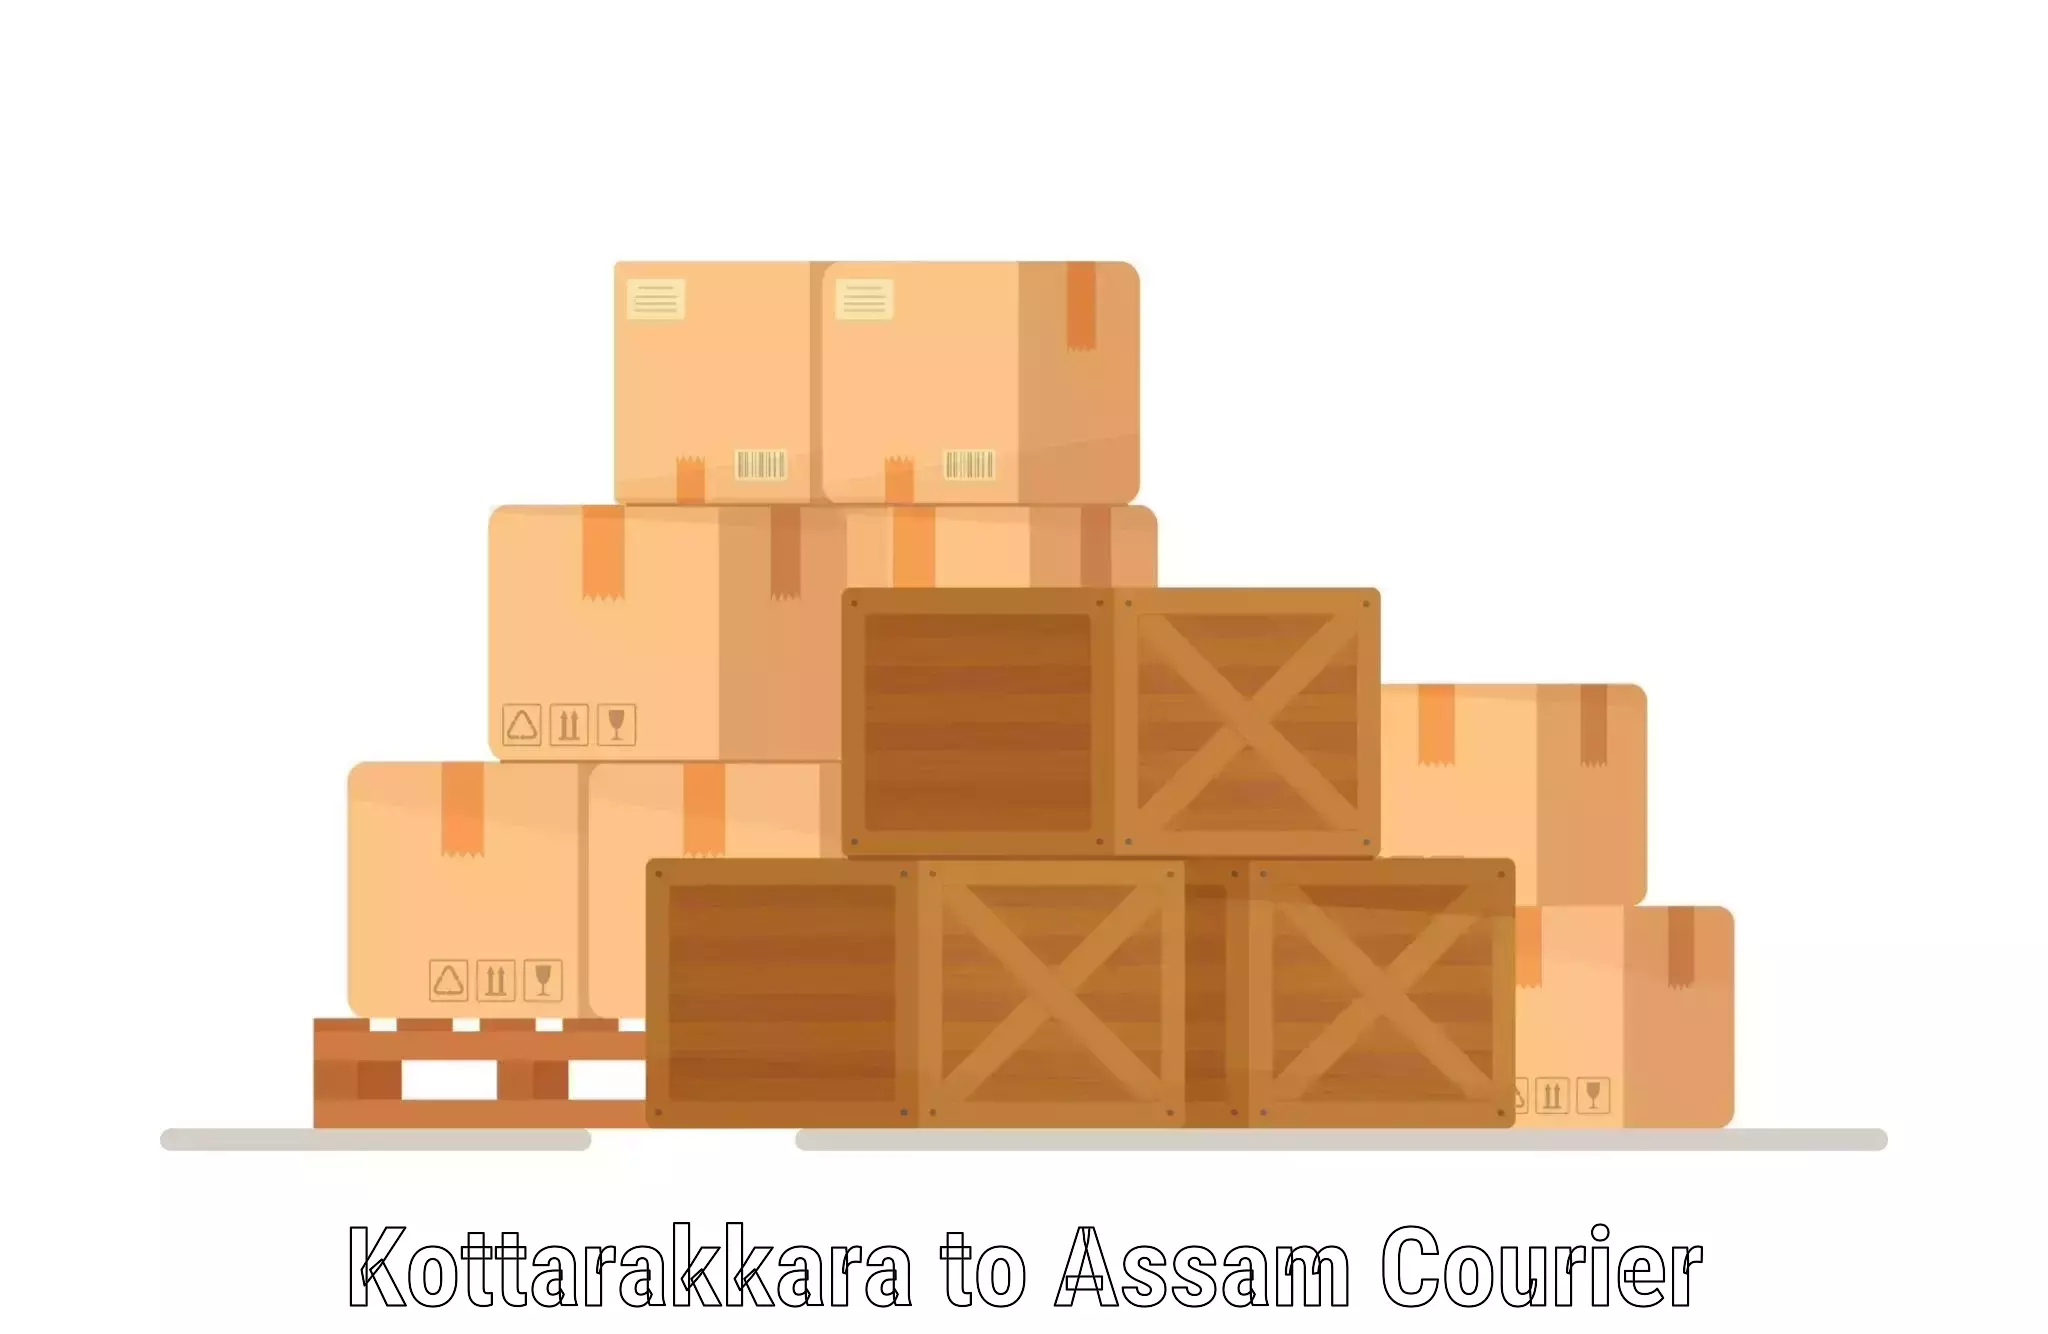 Next-day delivery options Kottarakkara to Assam